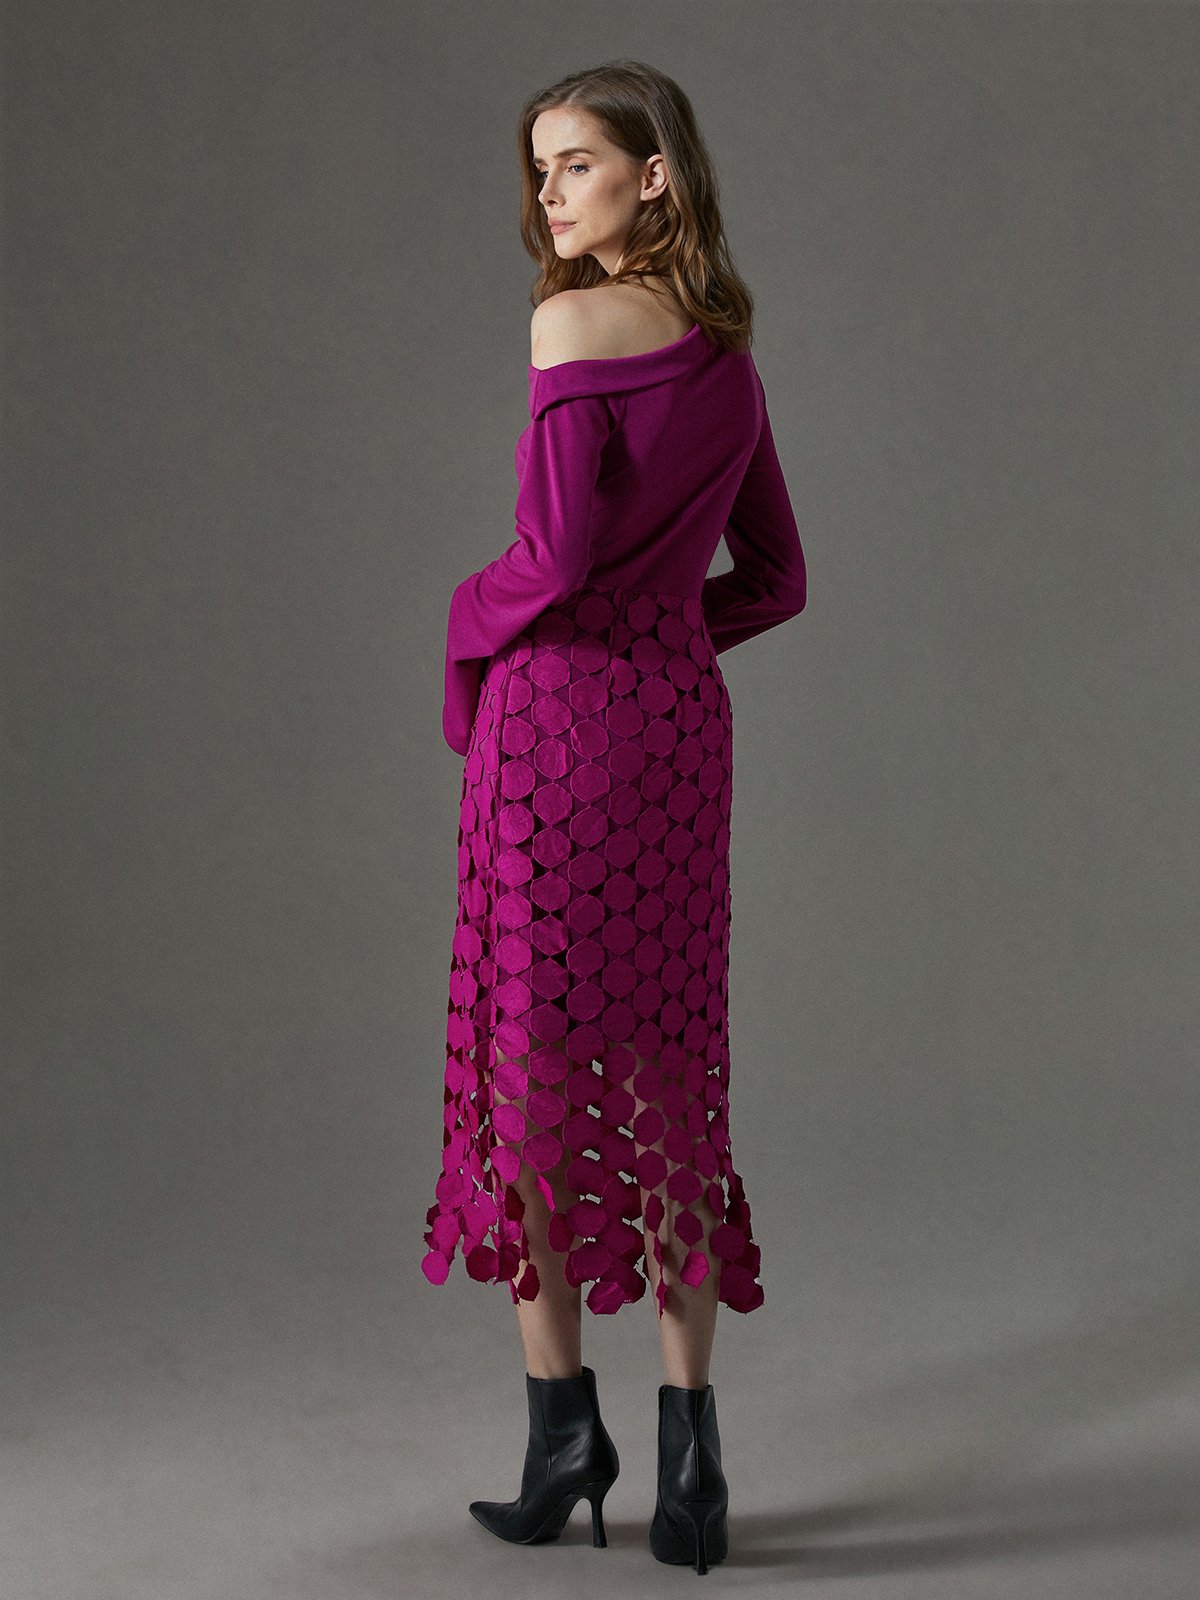 Daily Long Sleeve Elegant Lace Plain Dress